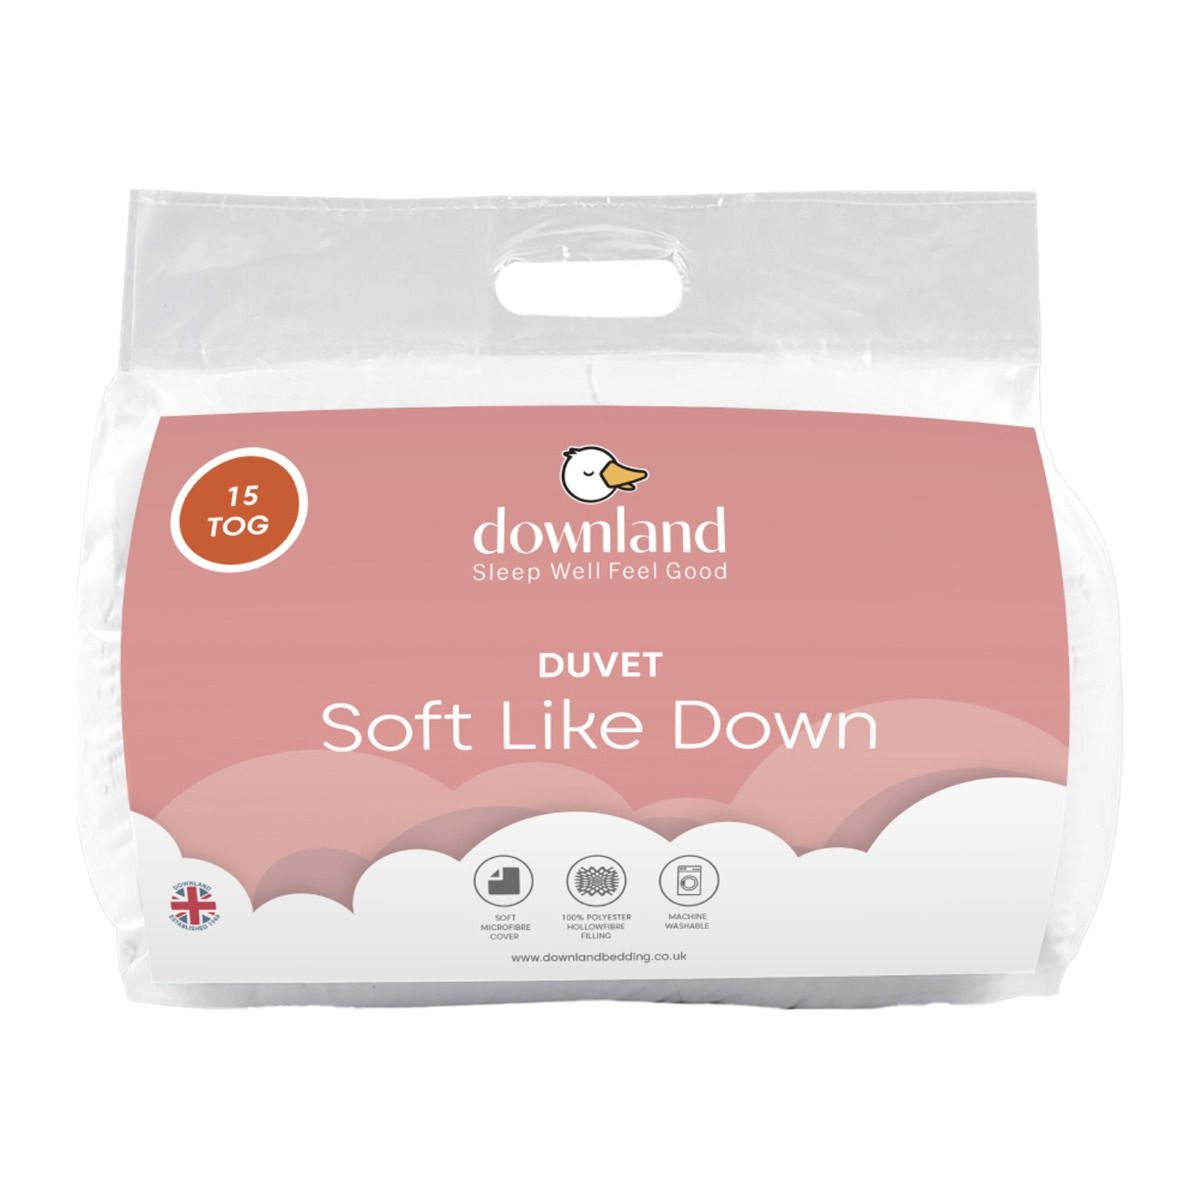 Downland Soft Like Down 15 Tog Duvet - White